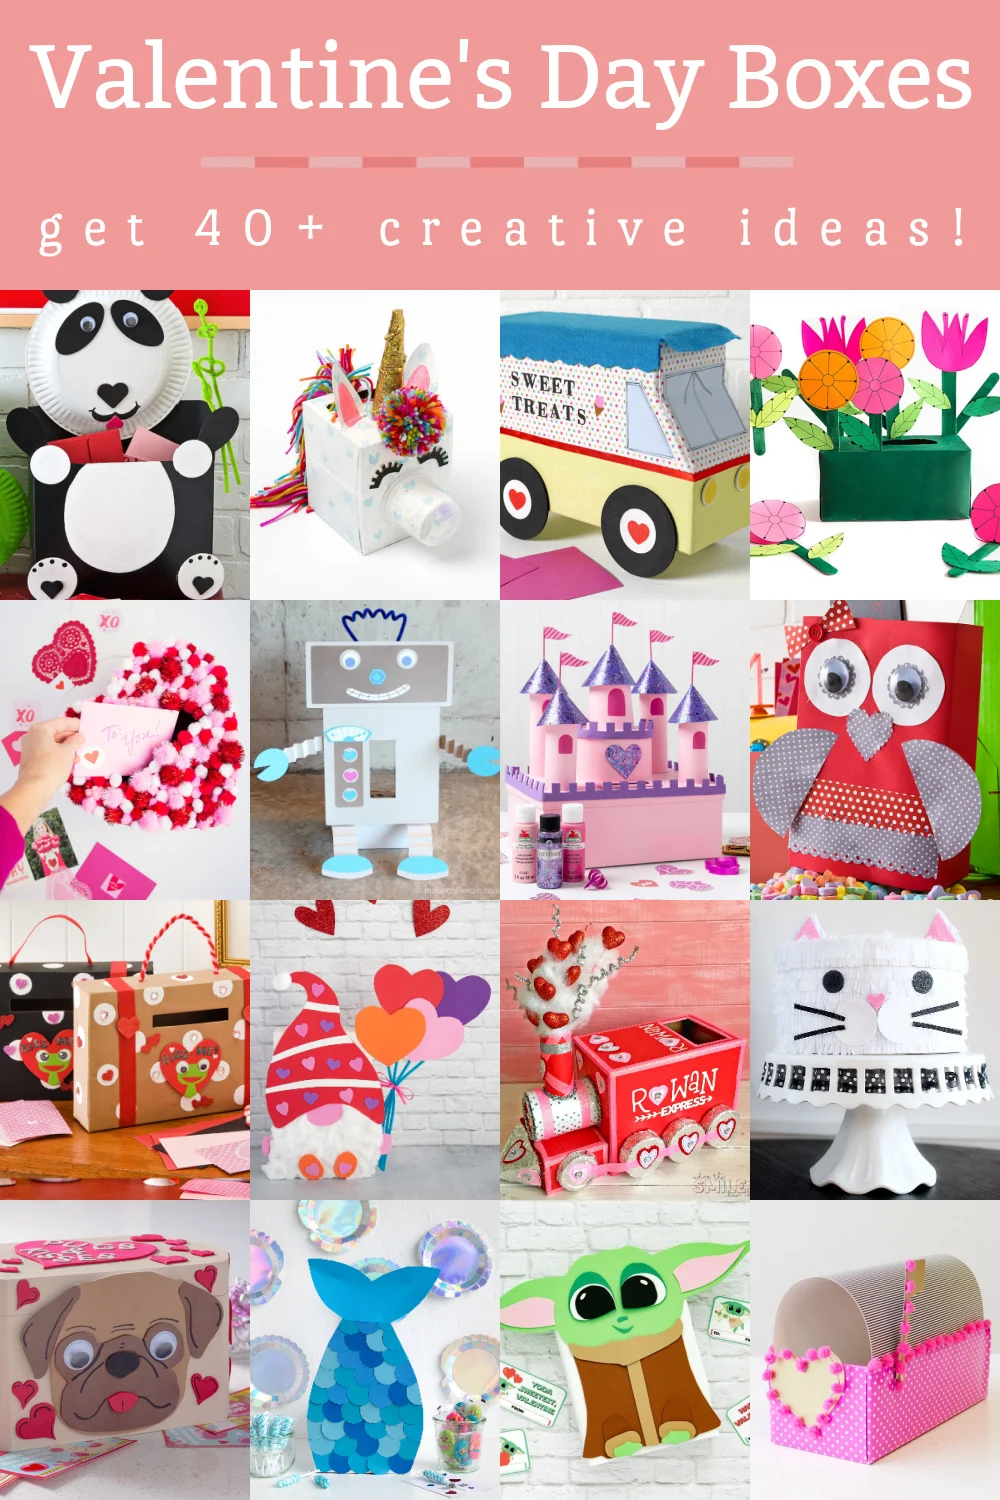 20 Cute Valentine Crafts • B-Inspired Mama